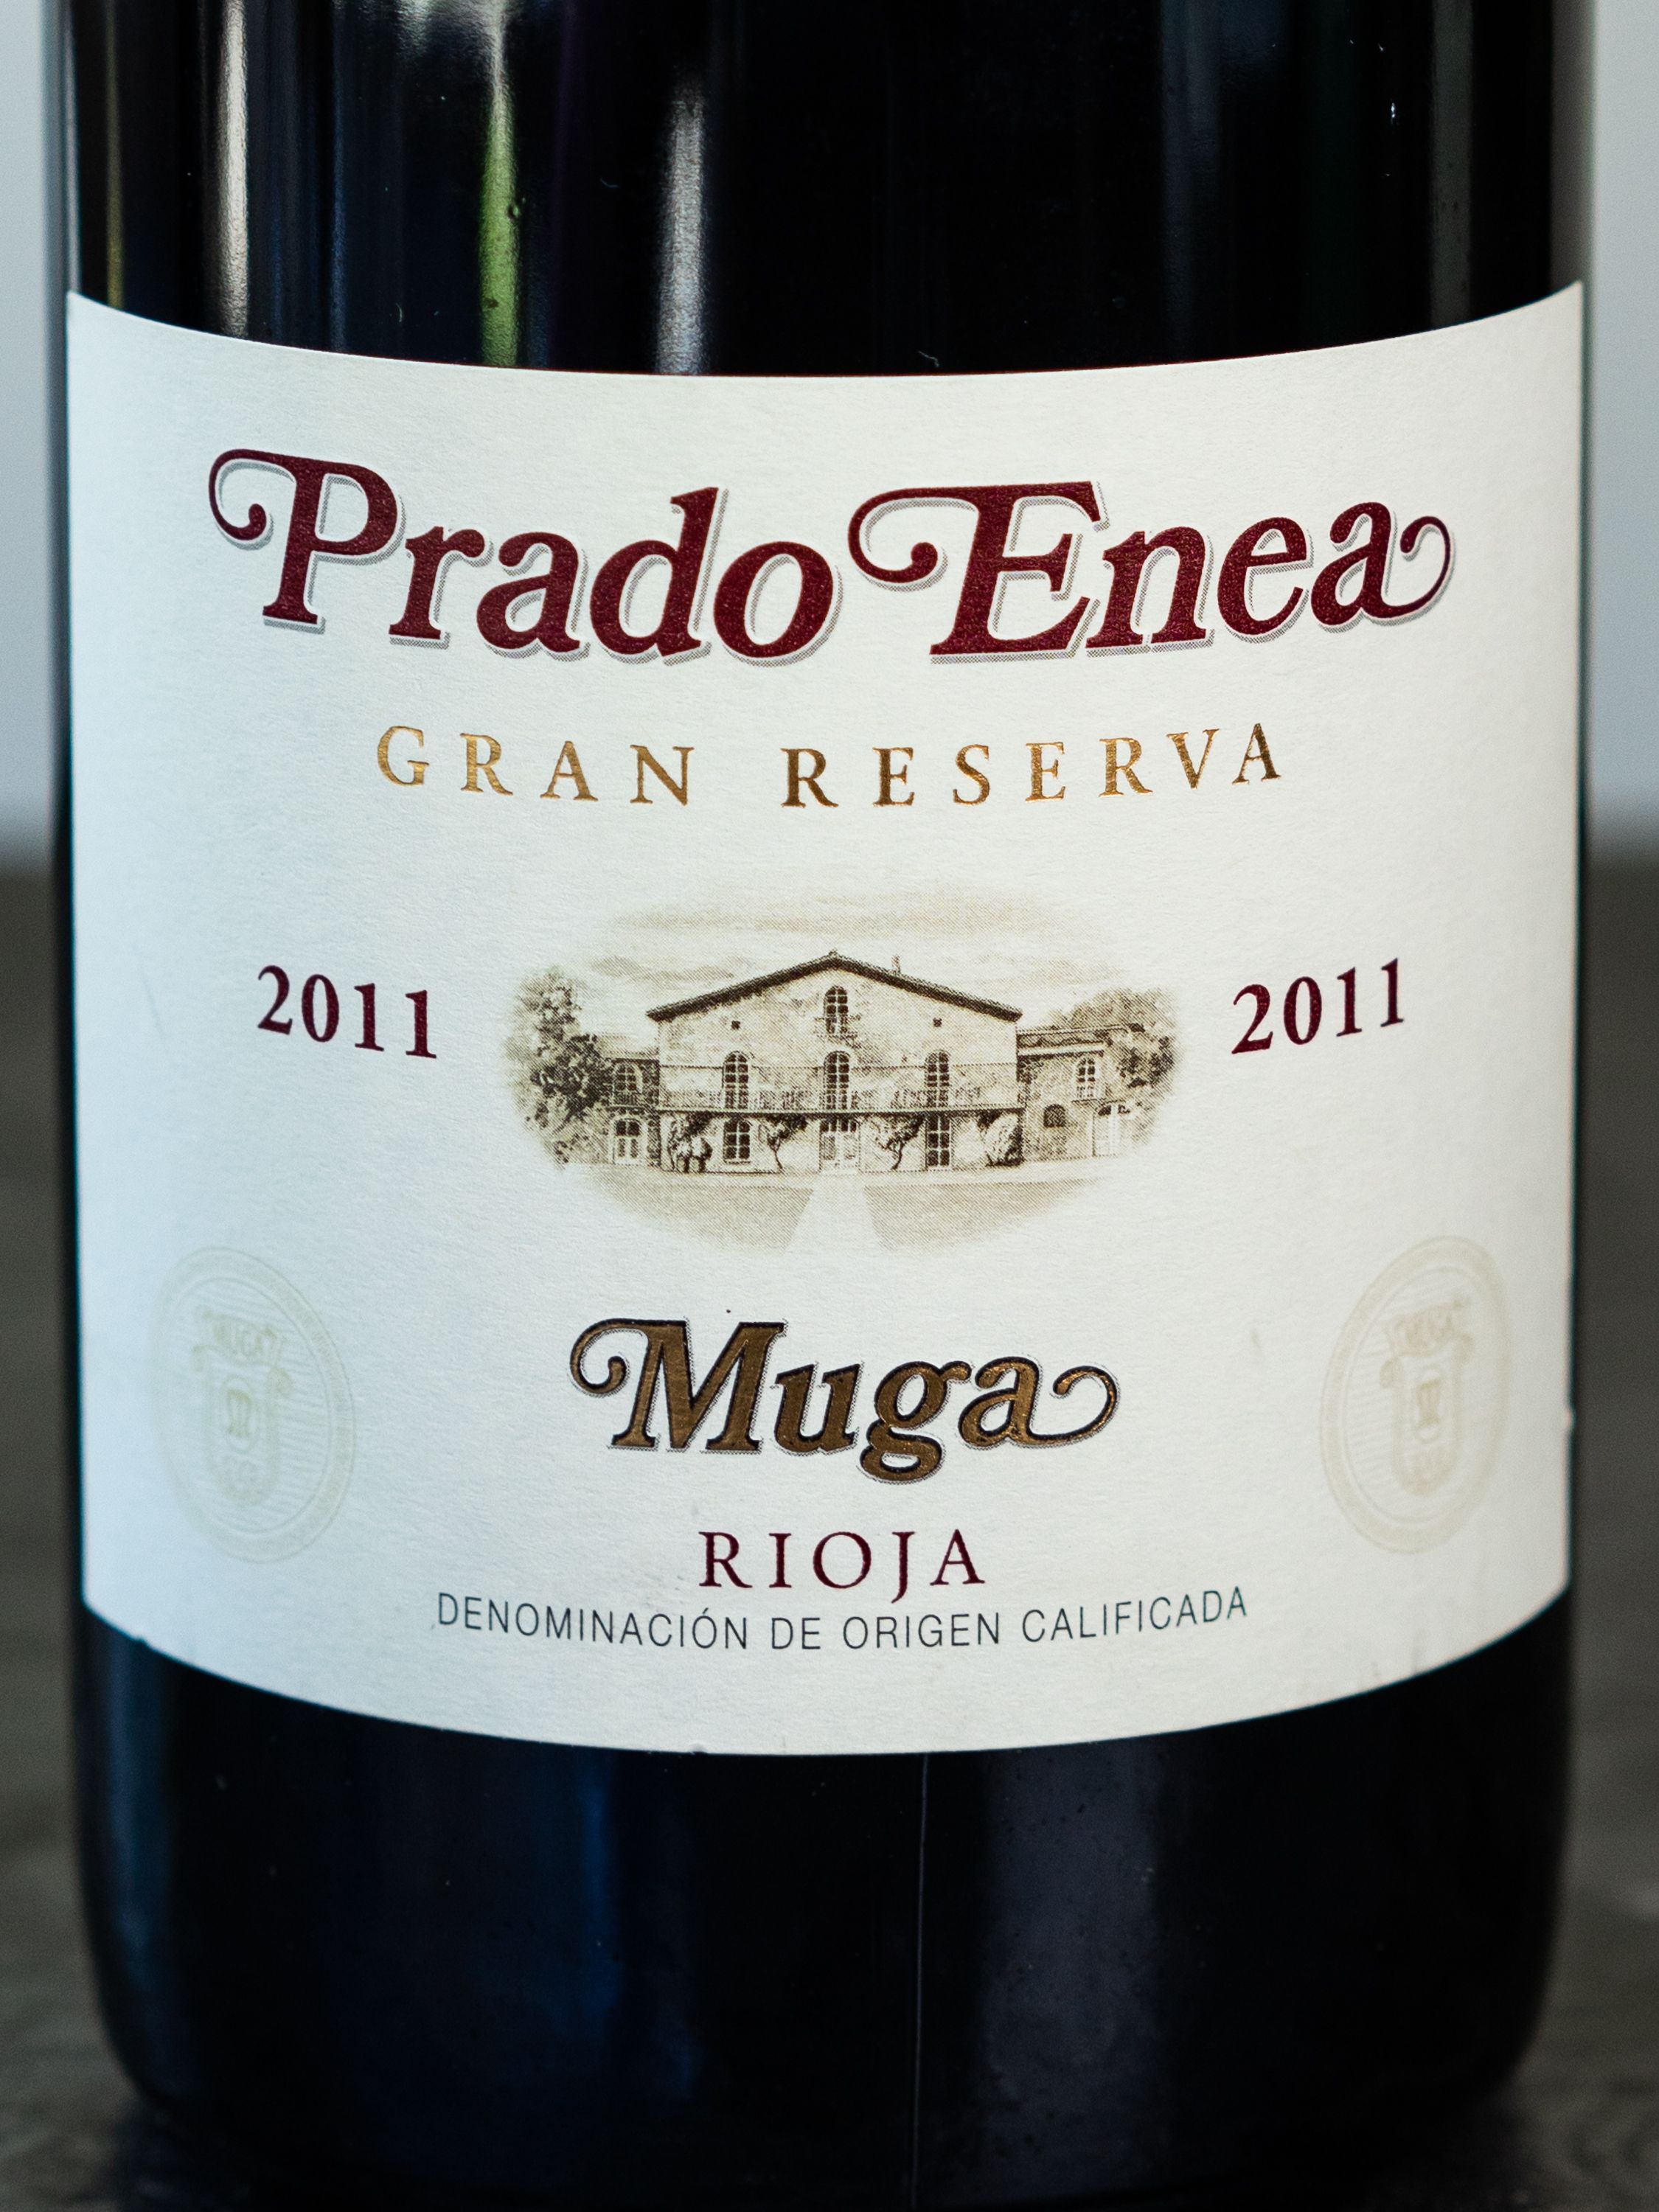 Вино Muga Prado Enea Gran Reserva Rioja / Прадо Энеа Гран Резерва